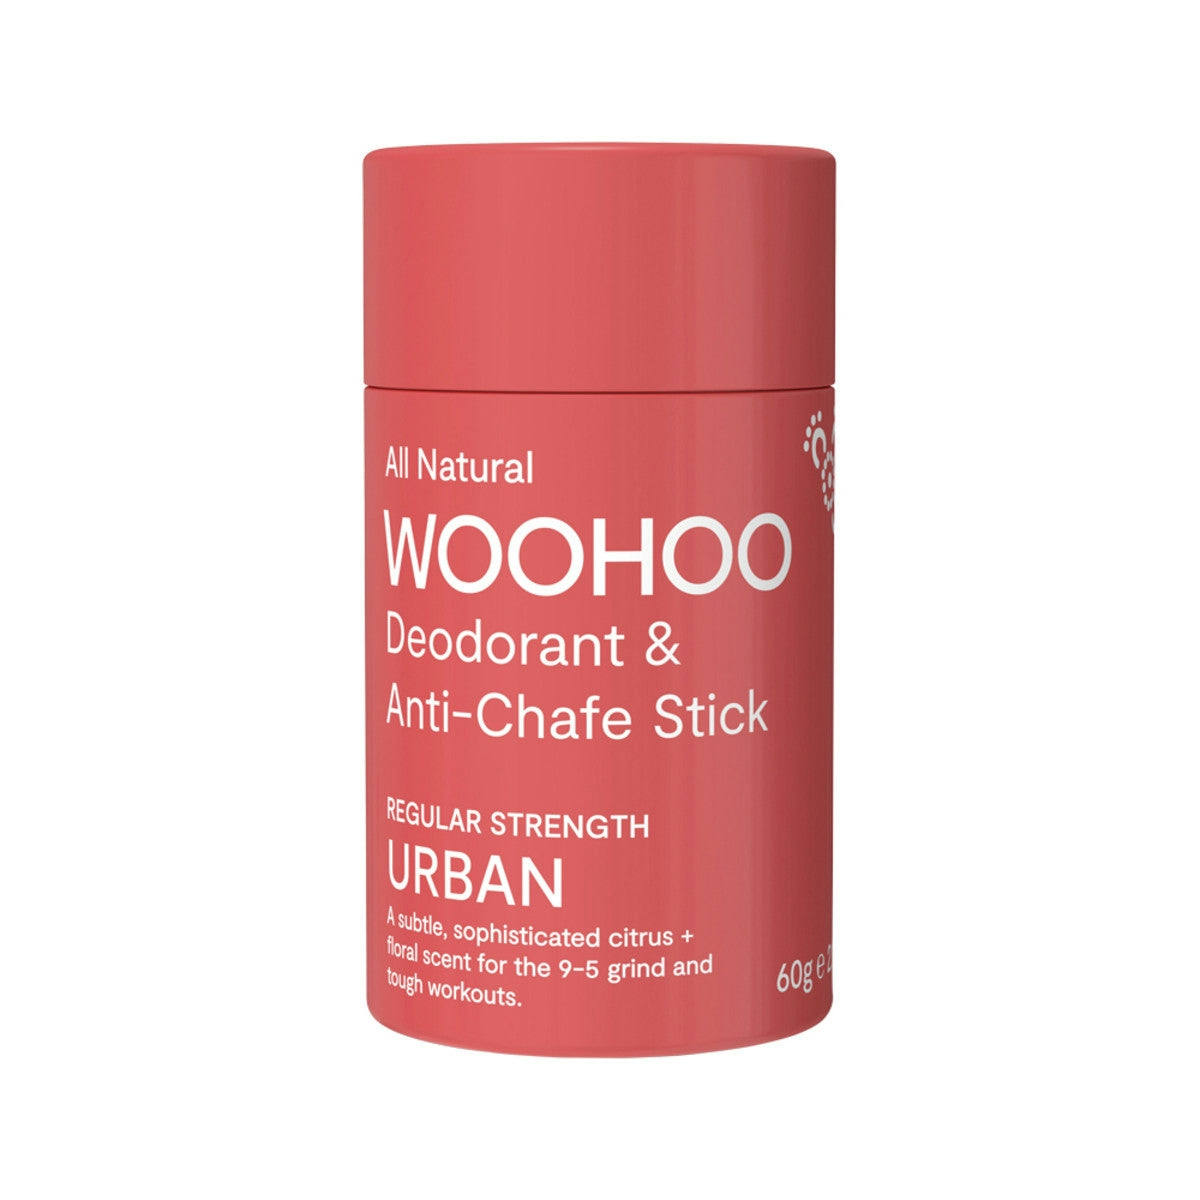 image of Woohoo Deodorant & Anti-Chafe Stick Urban 60g on white background